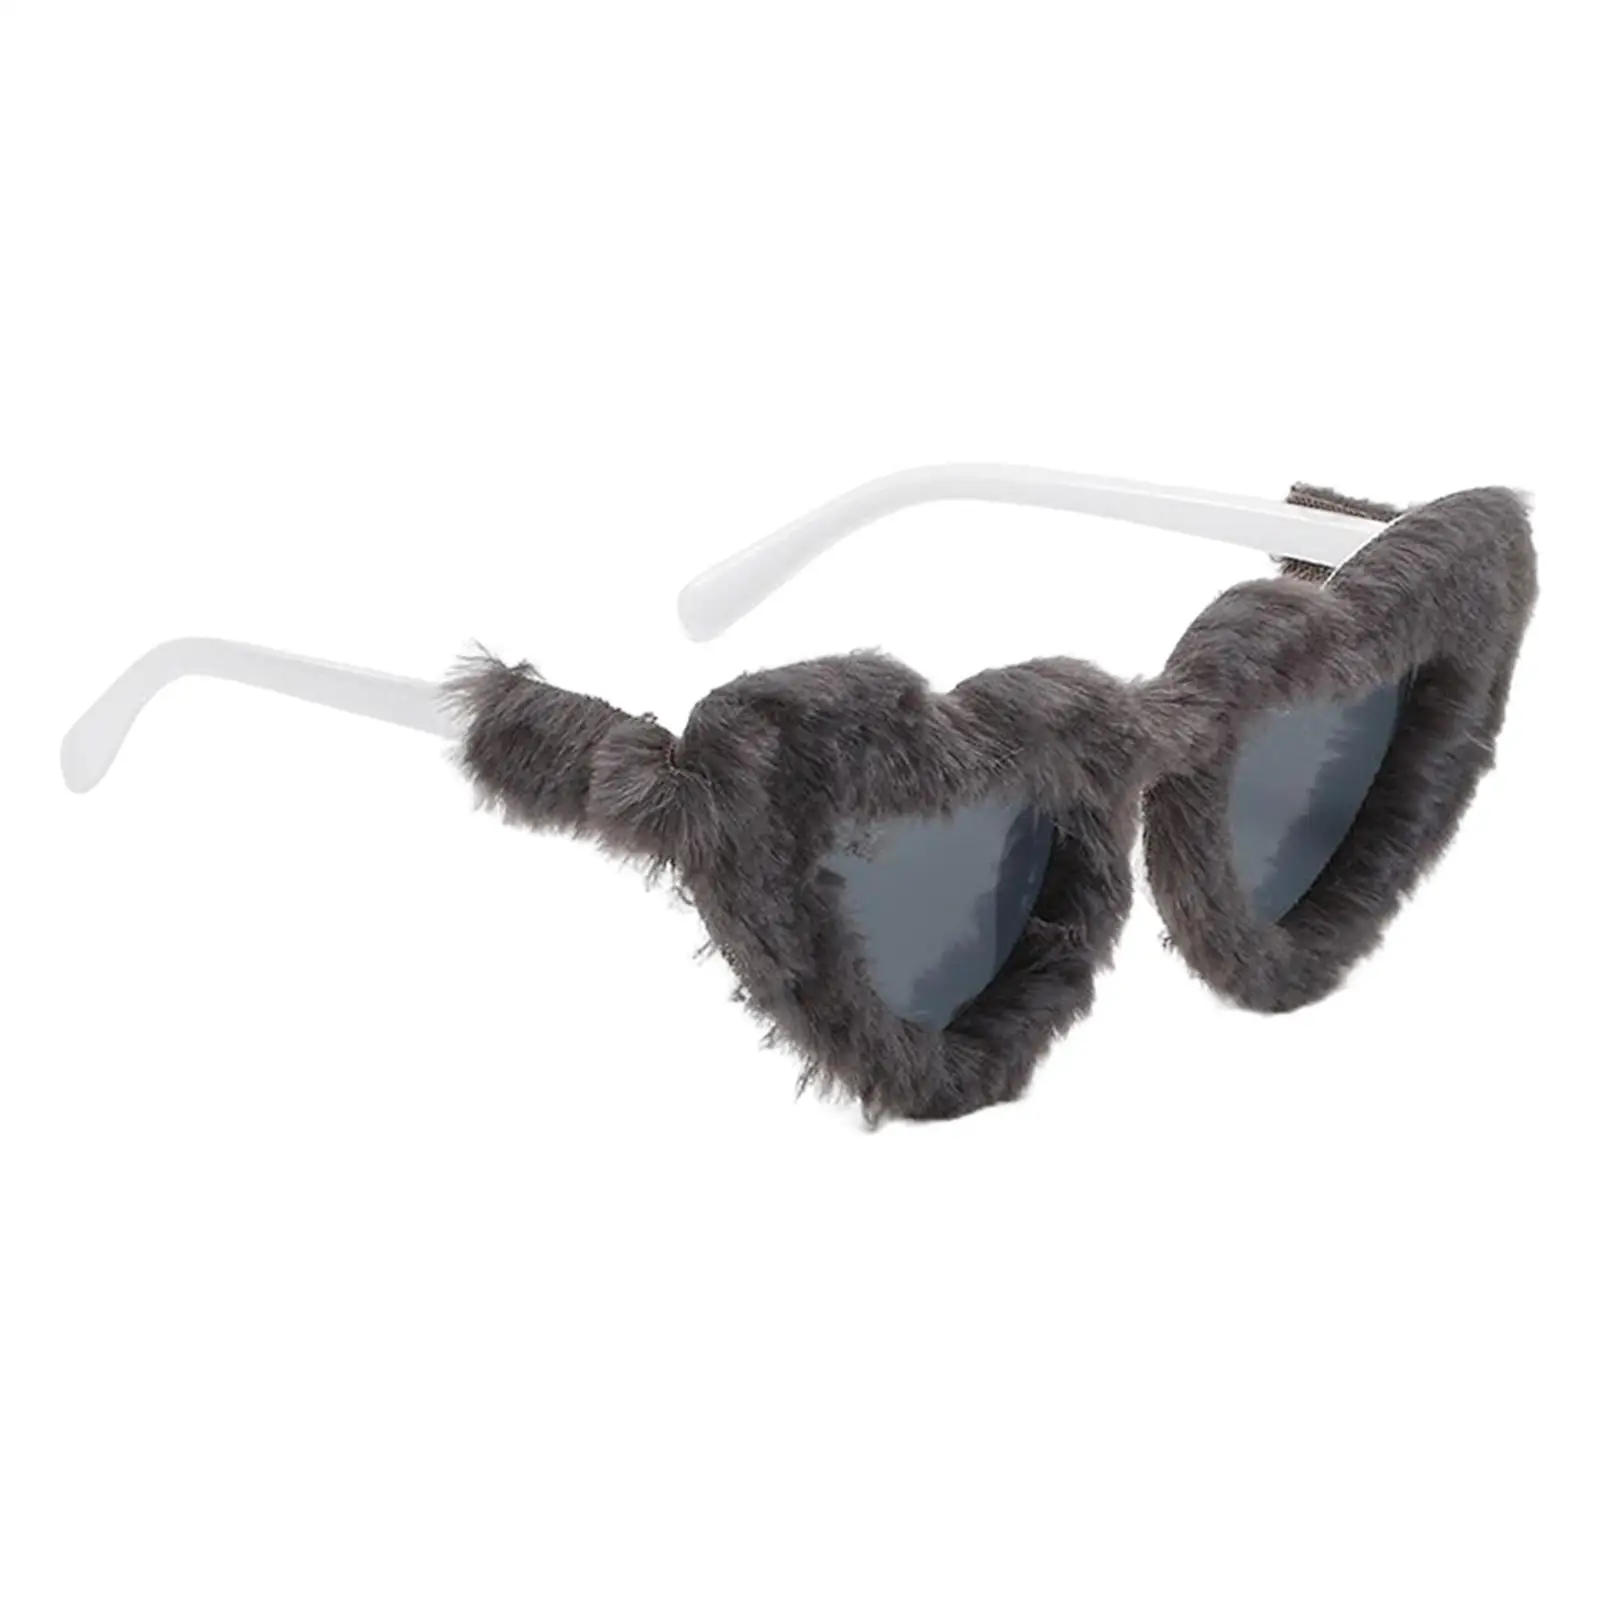 Soft Plush Sunglasses Sun Glasses Eyewear for Masquerade Travel Photo Props